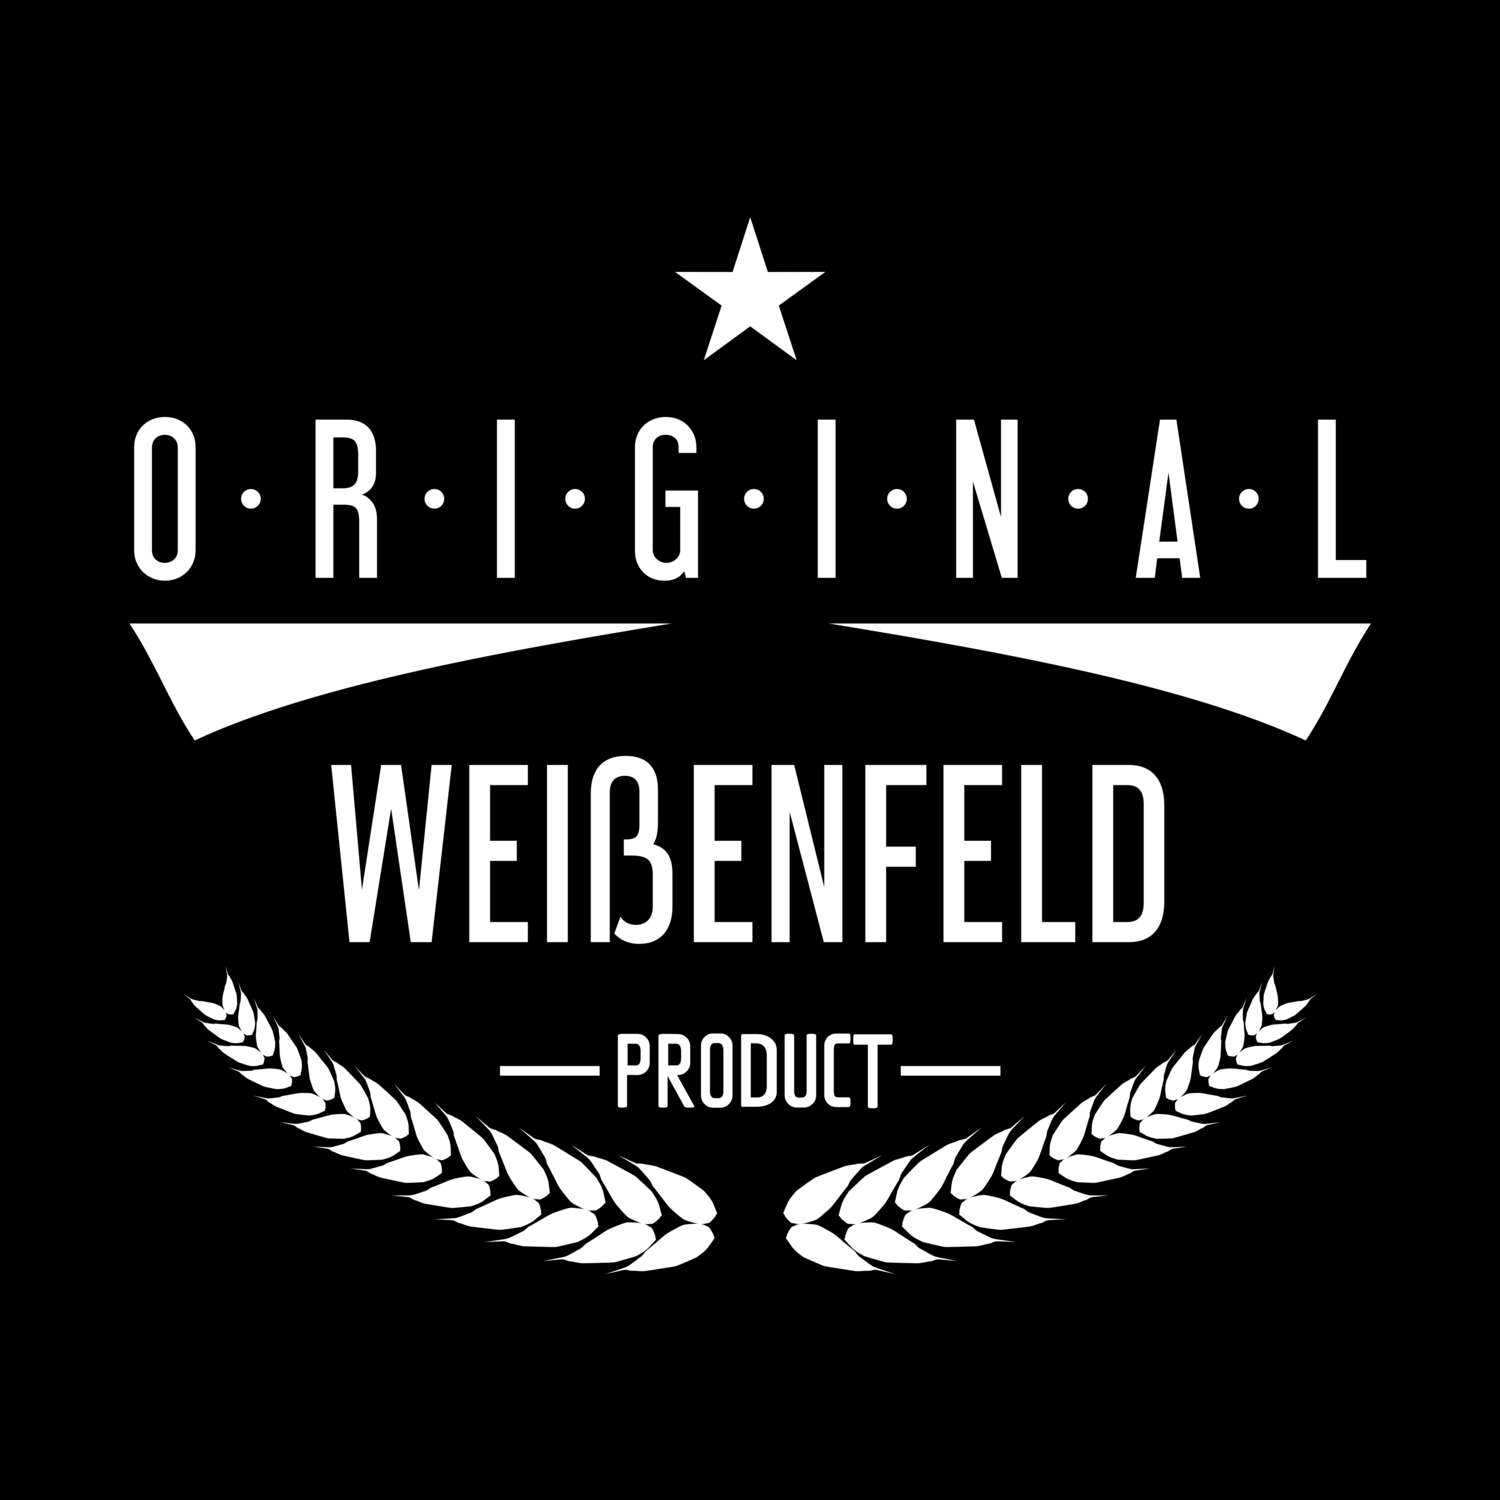 Weißenfeld T-Shirt »Original Product«